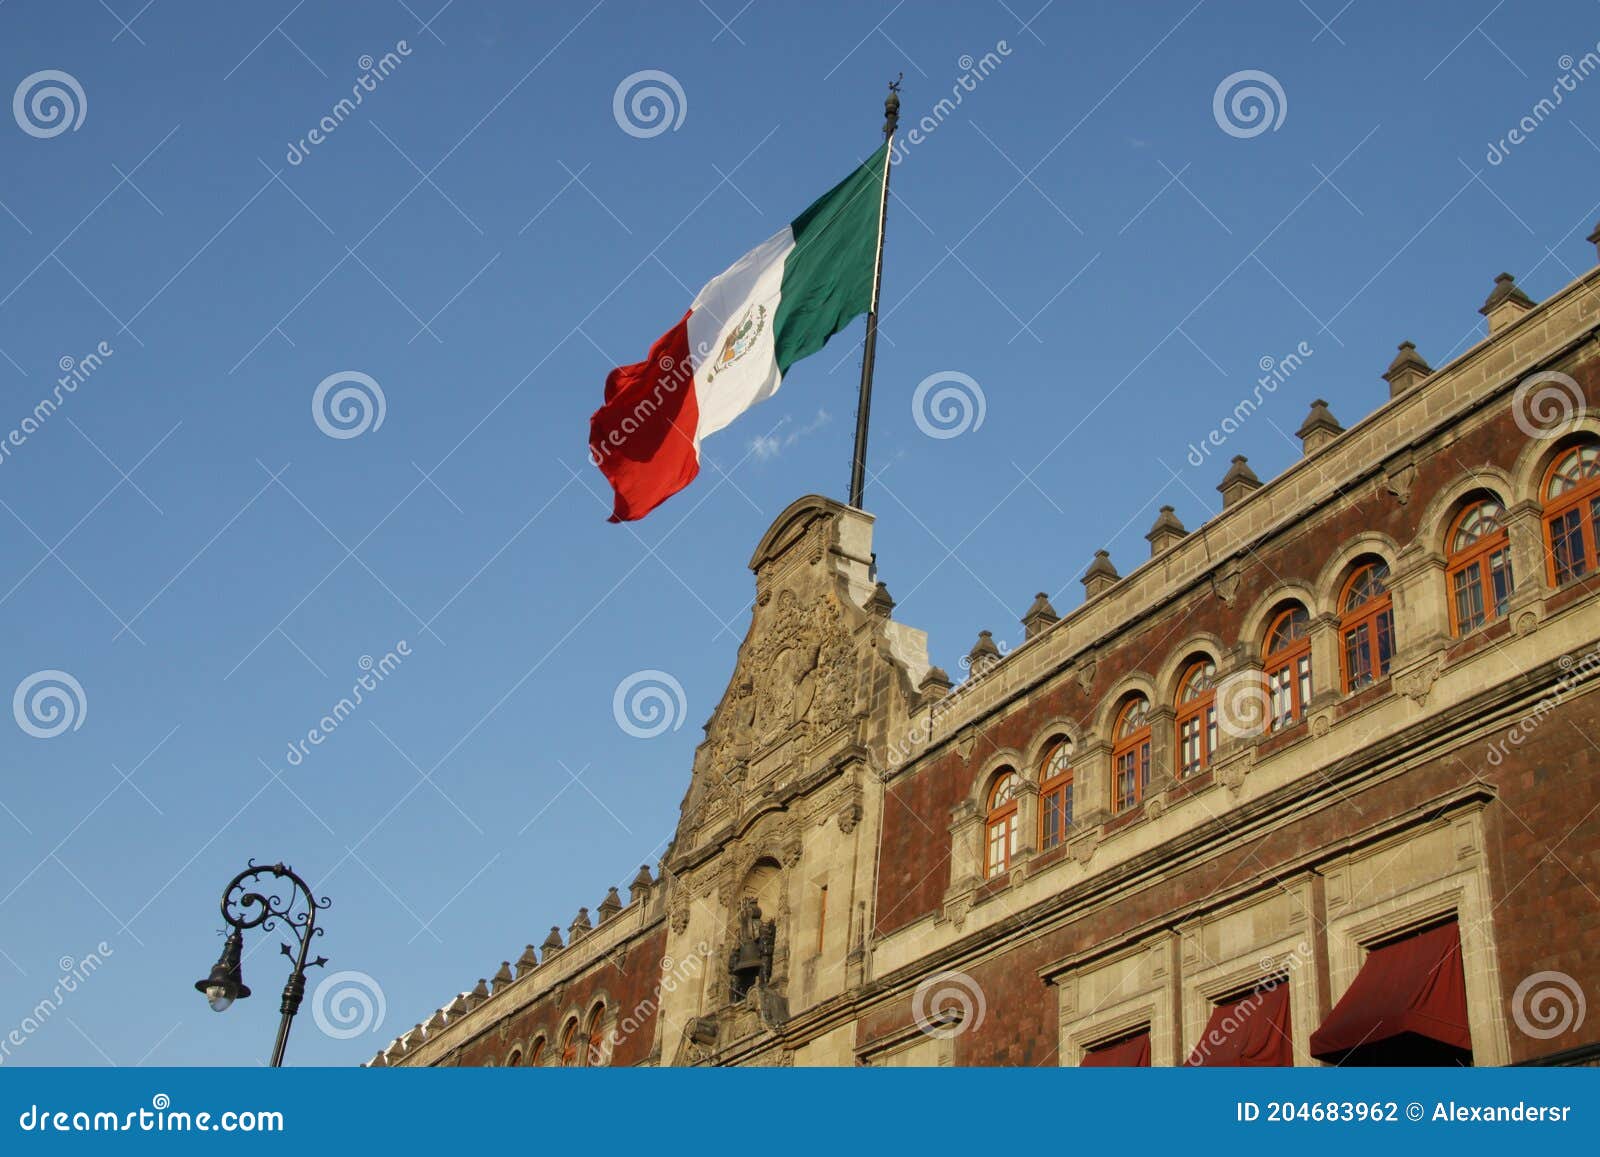 beautiful flag of mexico waving from above palacio de gobierno or national palace, mexico df, mexico